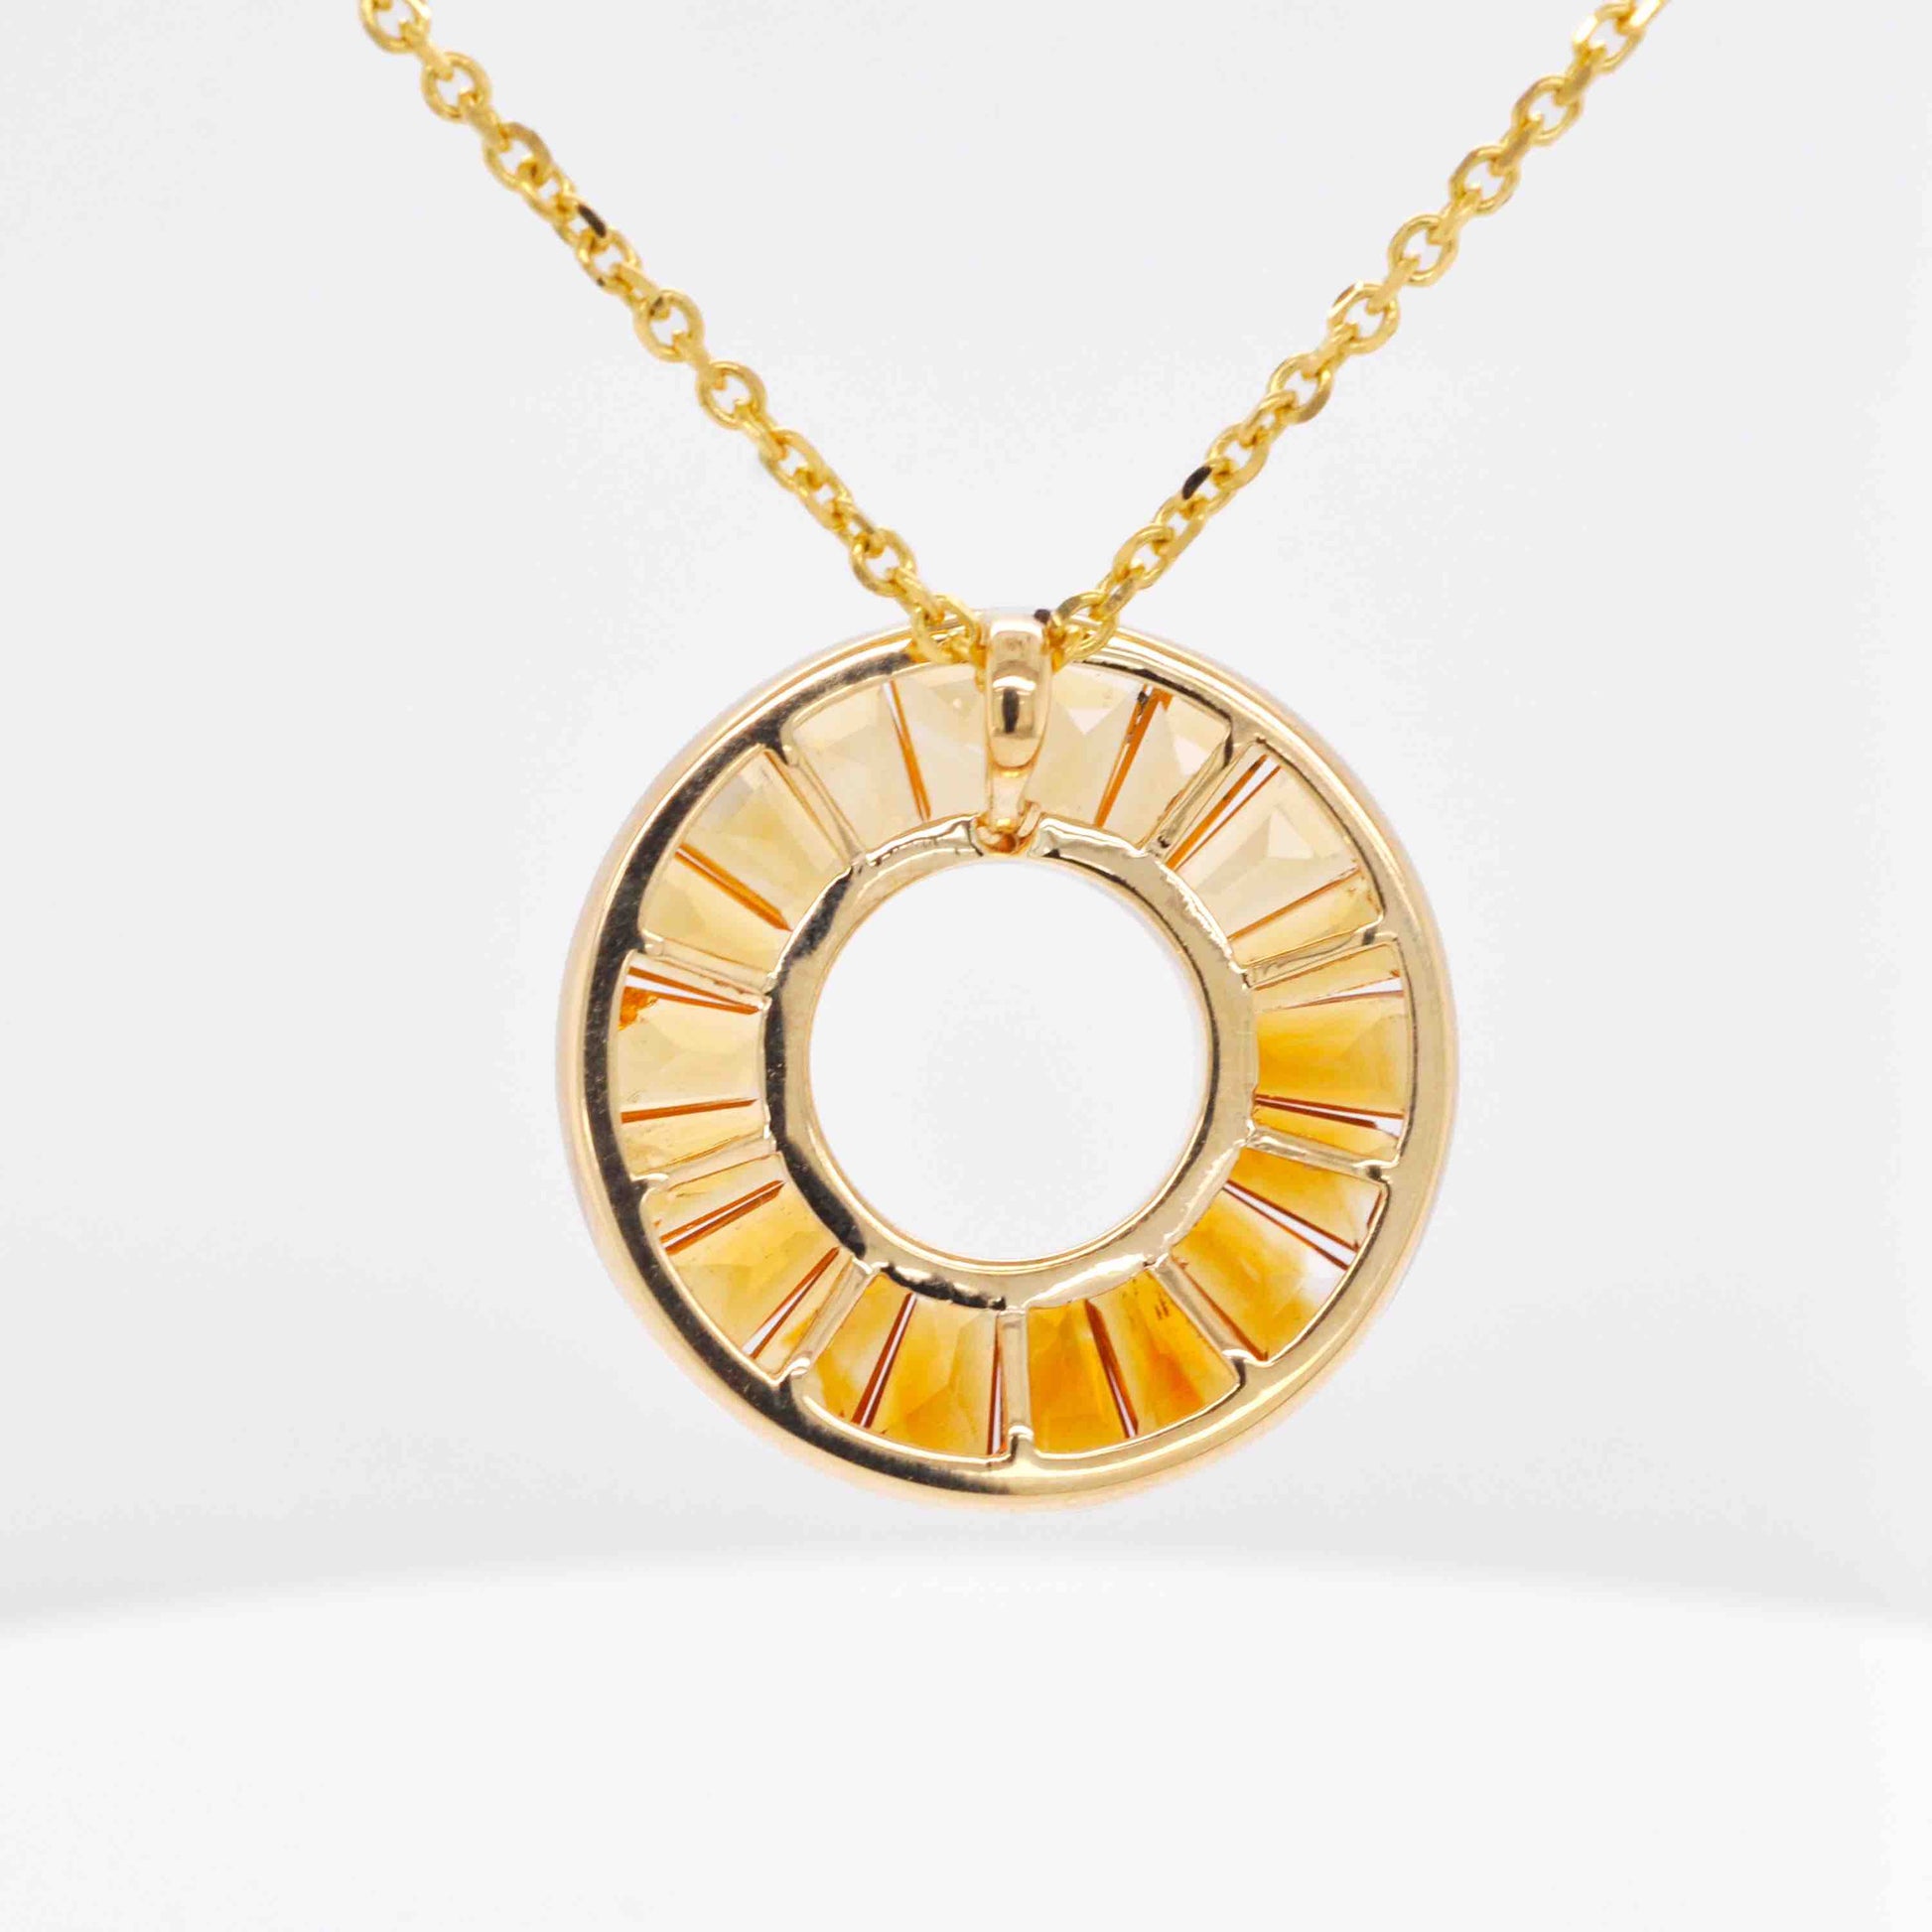 18K Gold Gradient Citrine Circle Pendant Necklace - Vaibhav Dhadda Jewelry